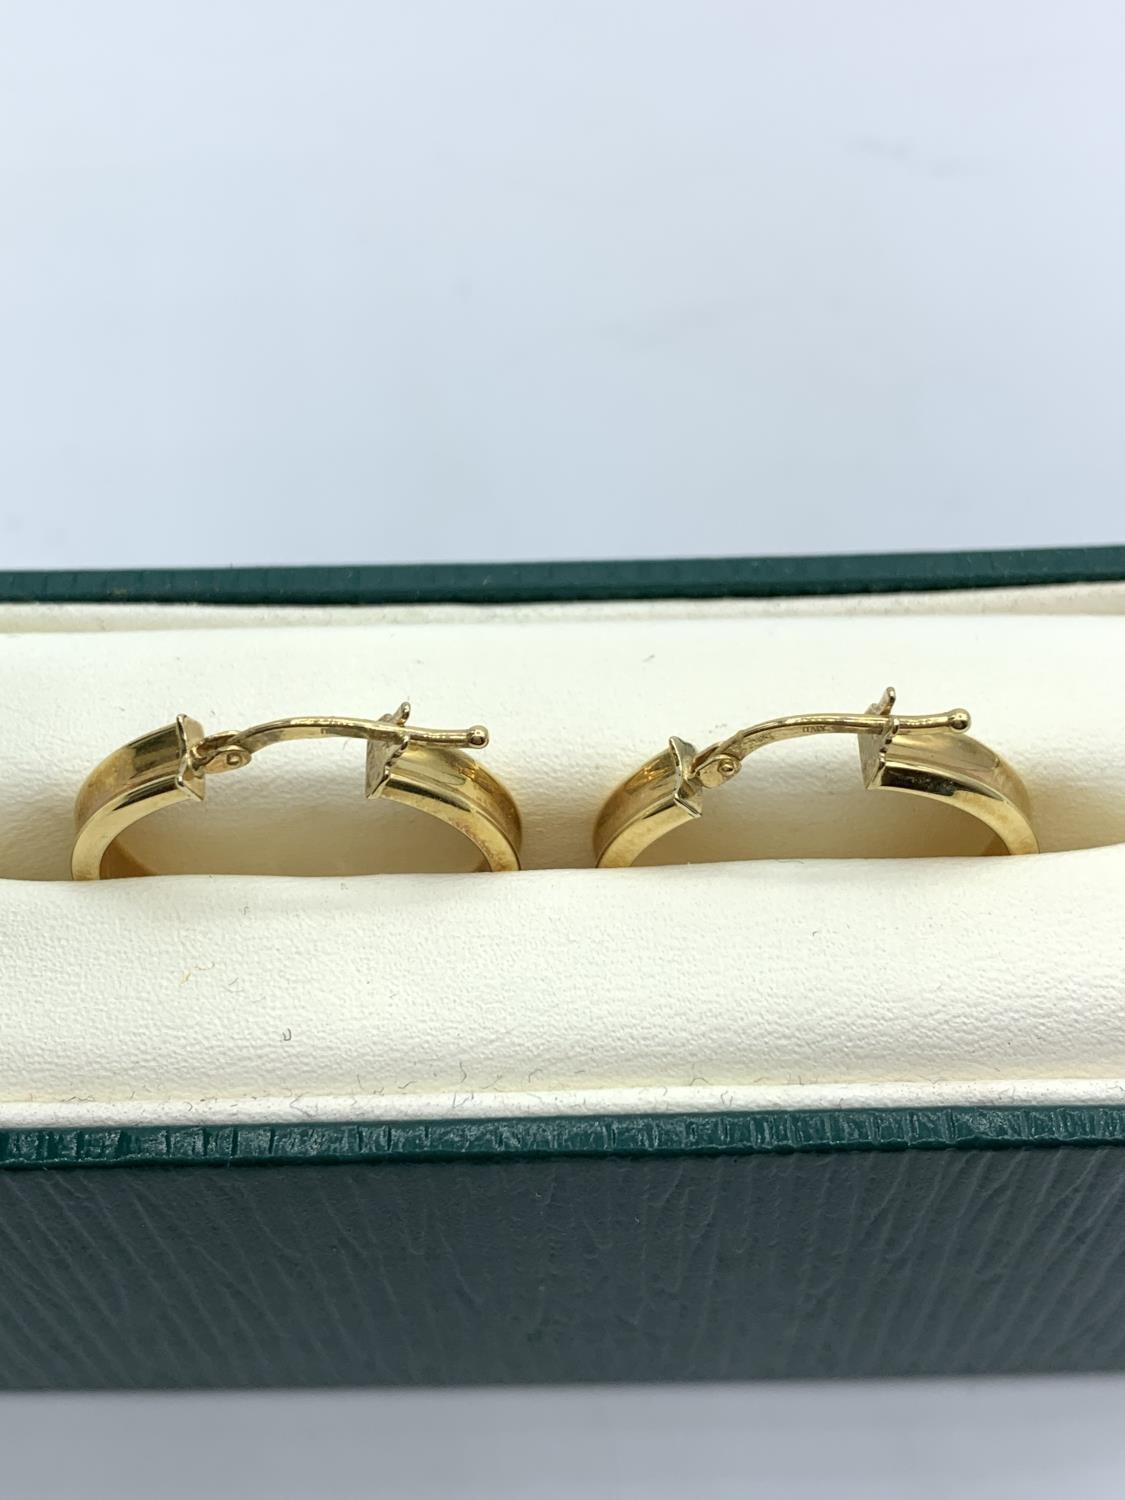 Pair of 18K Yellow Gold Hoop Earrings in original presentation box, weight 2.2g and 2cm diameter - Image 10 of 10